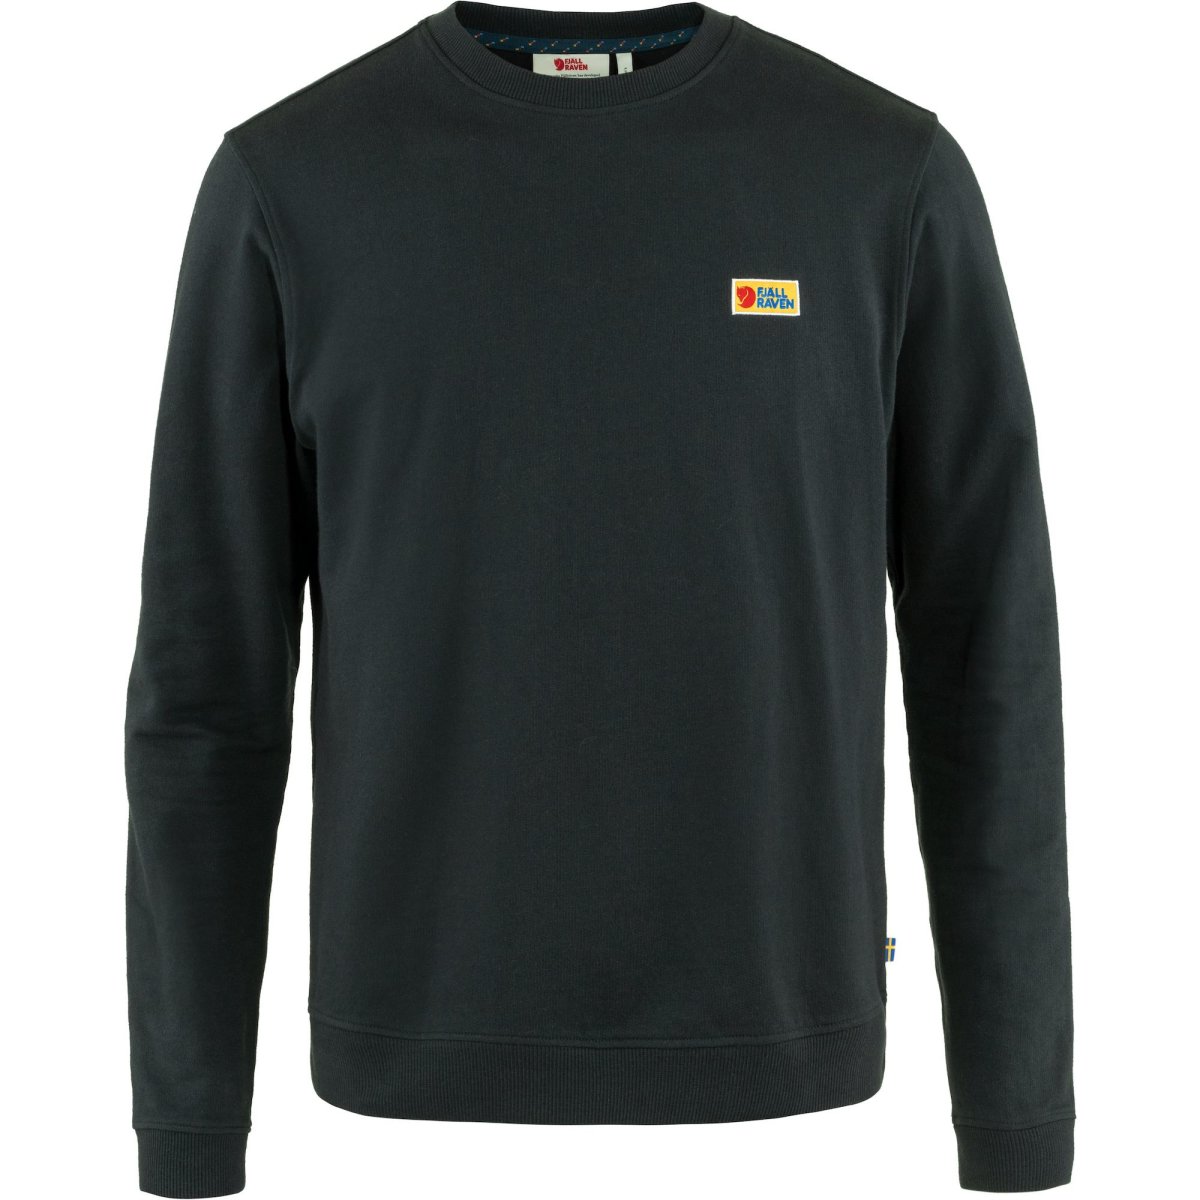 Fj&auml;llr&auml;ven Vardag Sweater 87070 black Herren Pullover Sweatshirt Shirt